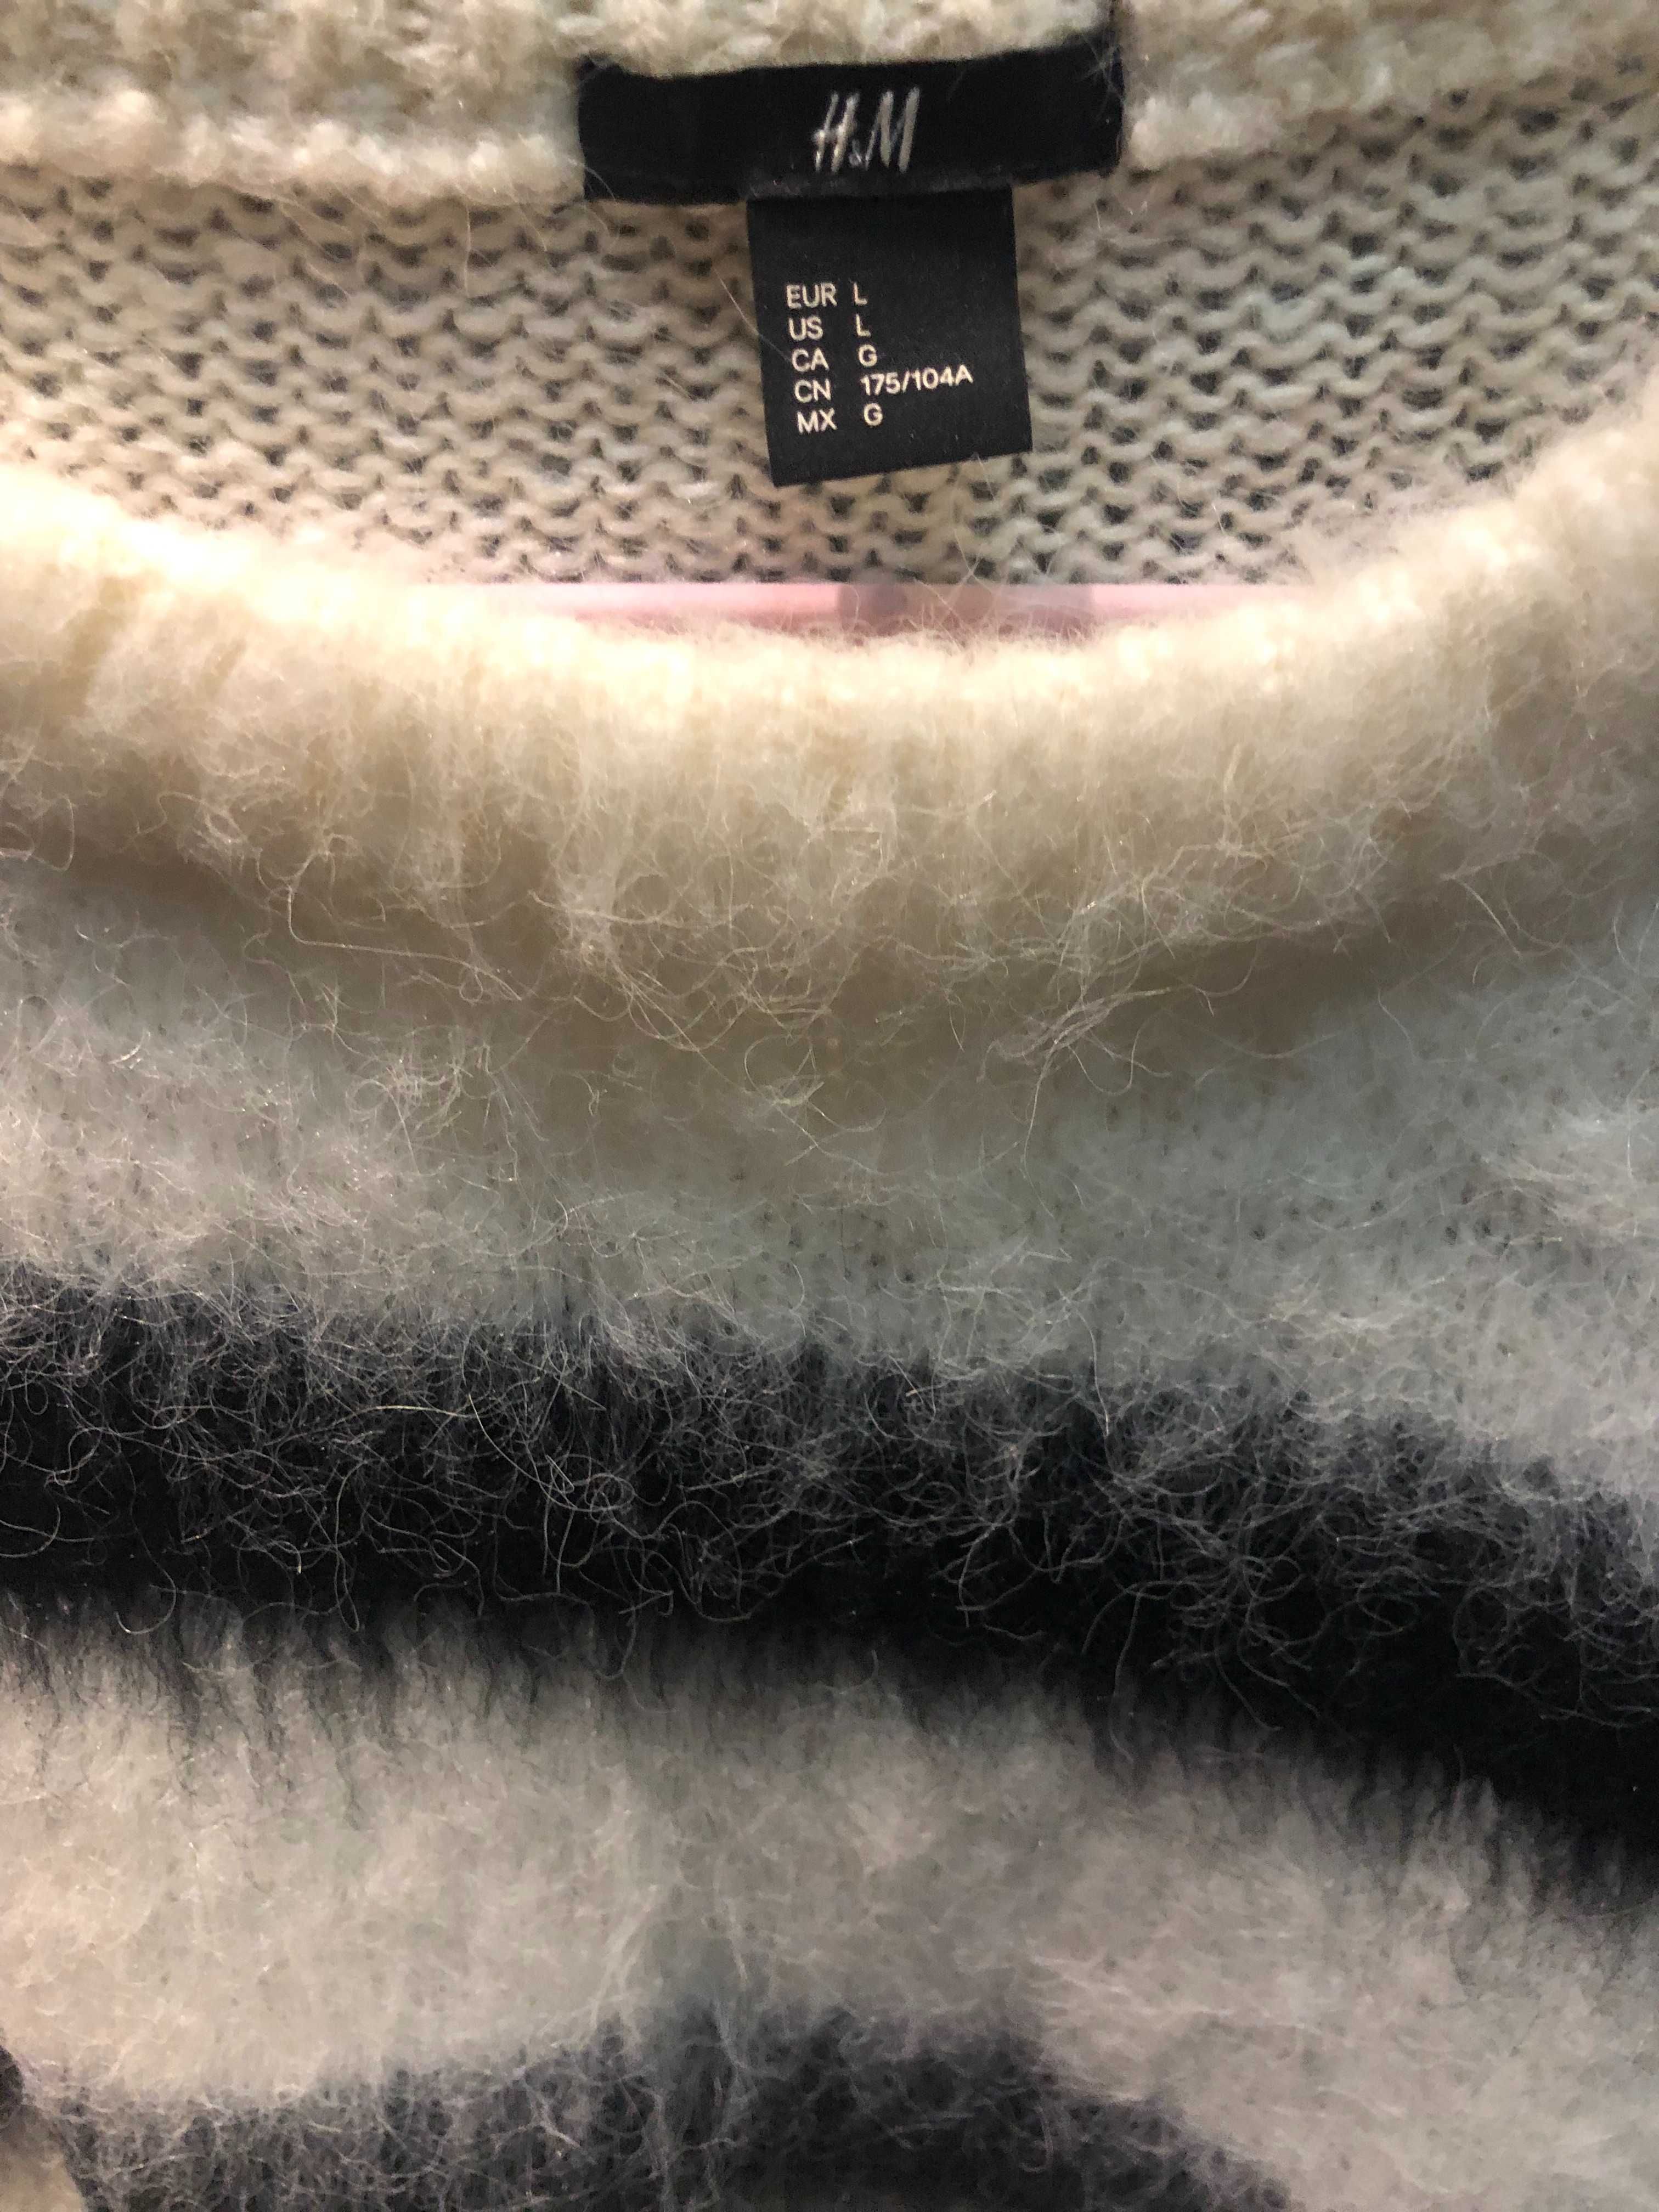 Pulover pufos scurt amestec lana alb dungi negre H&M nou